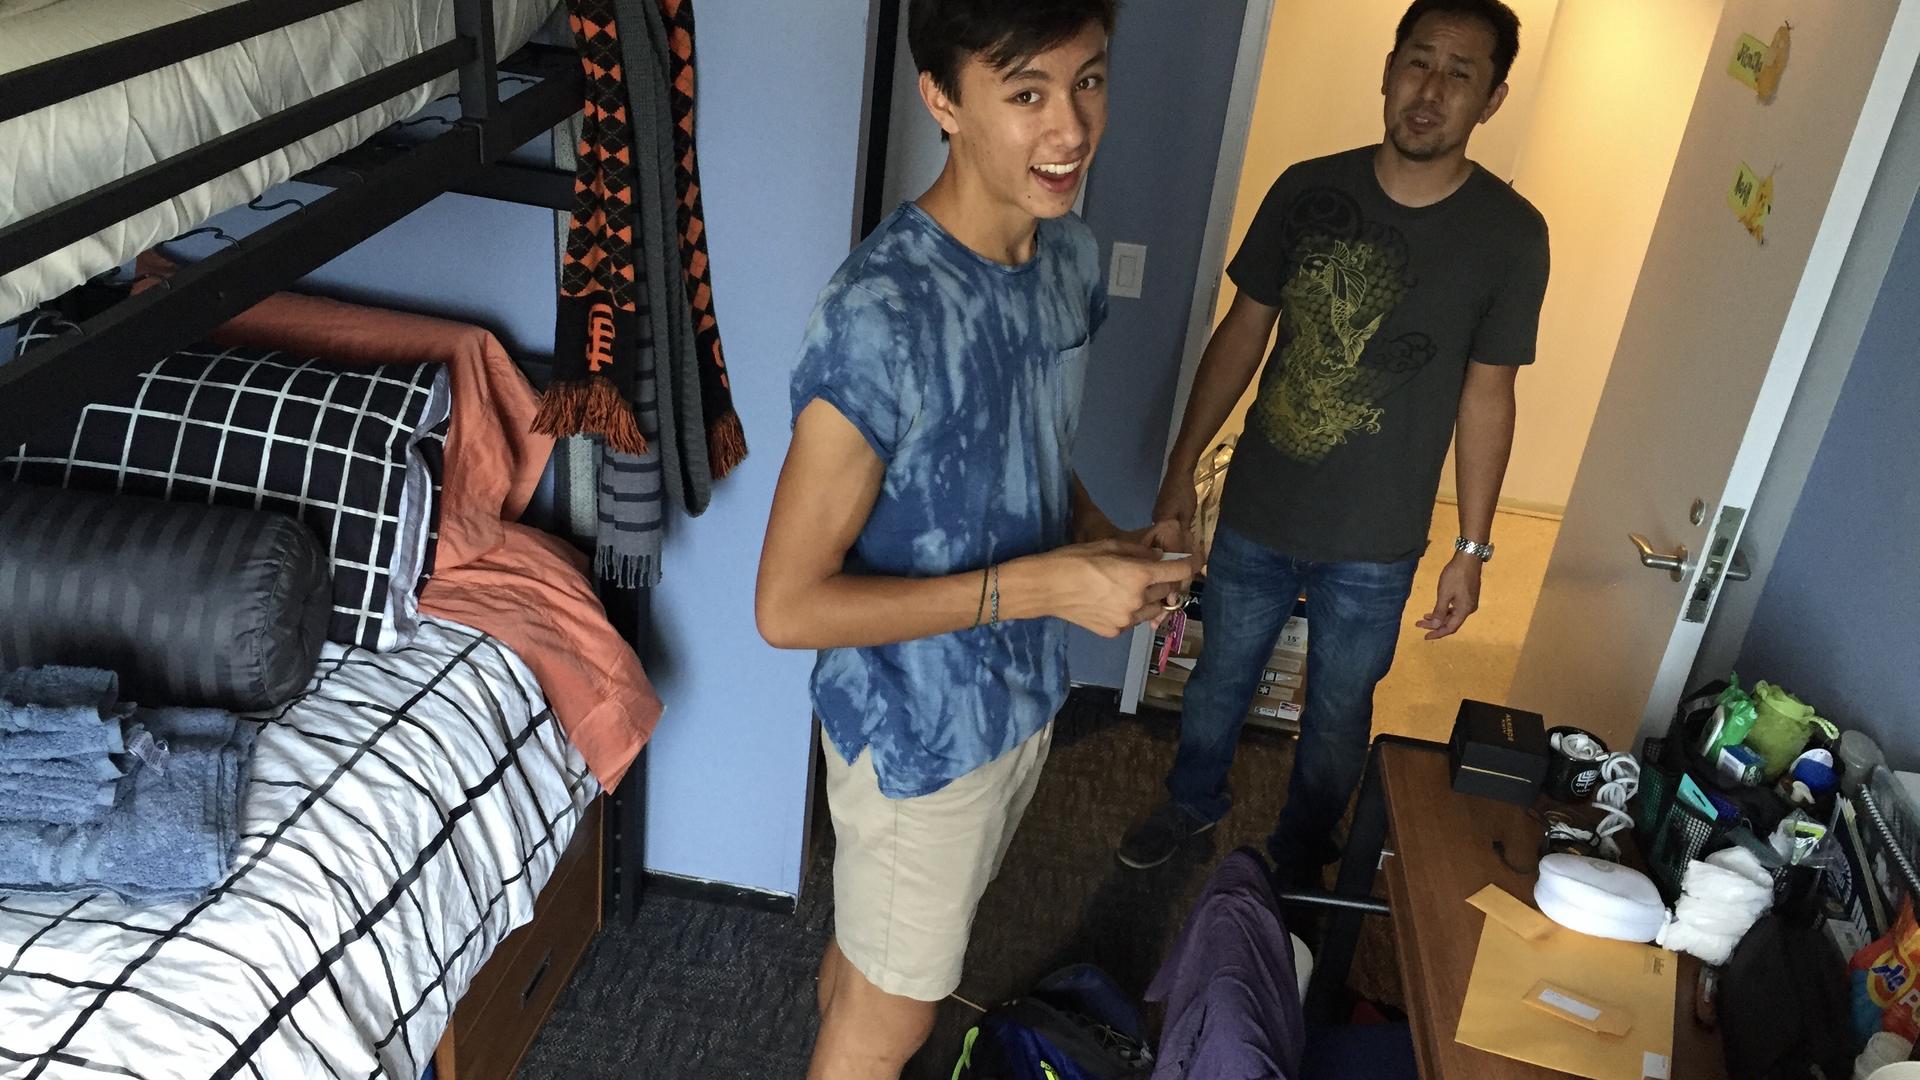 A young Noah stands in a dorm room